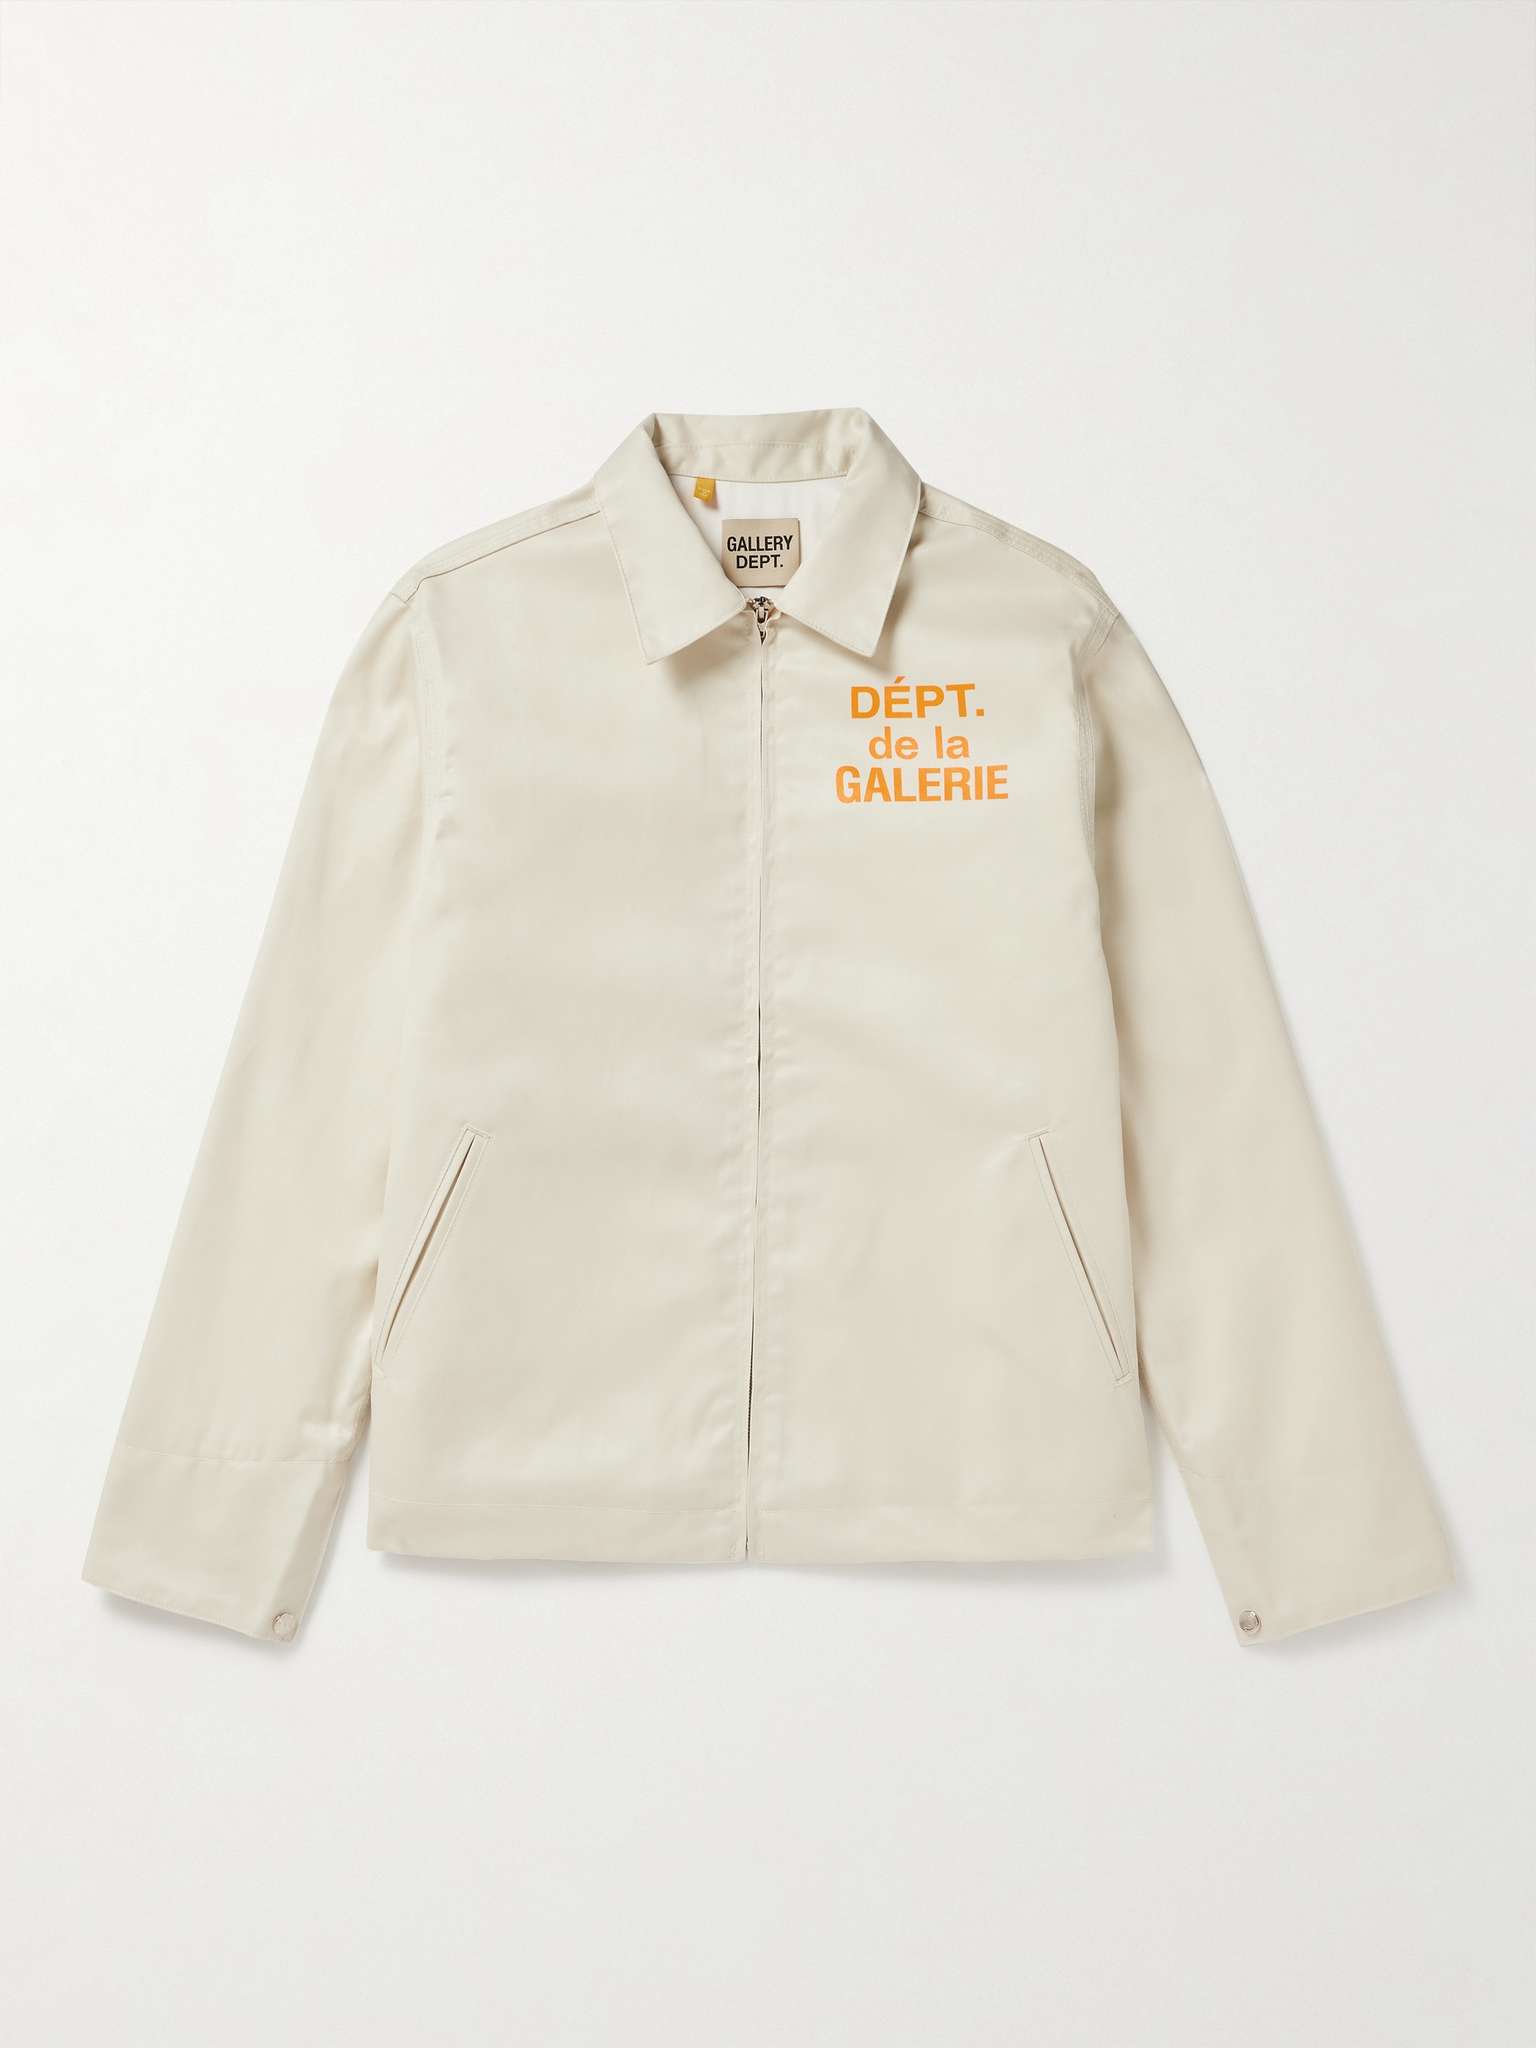 GALLERY DEPT. Montecito Logo-Print Cotton-Twill Jacket for Men | MR PORTER